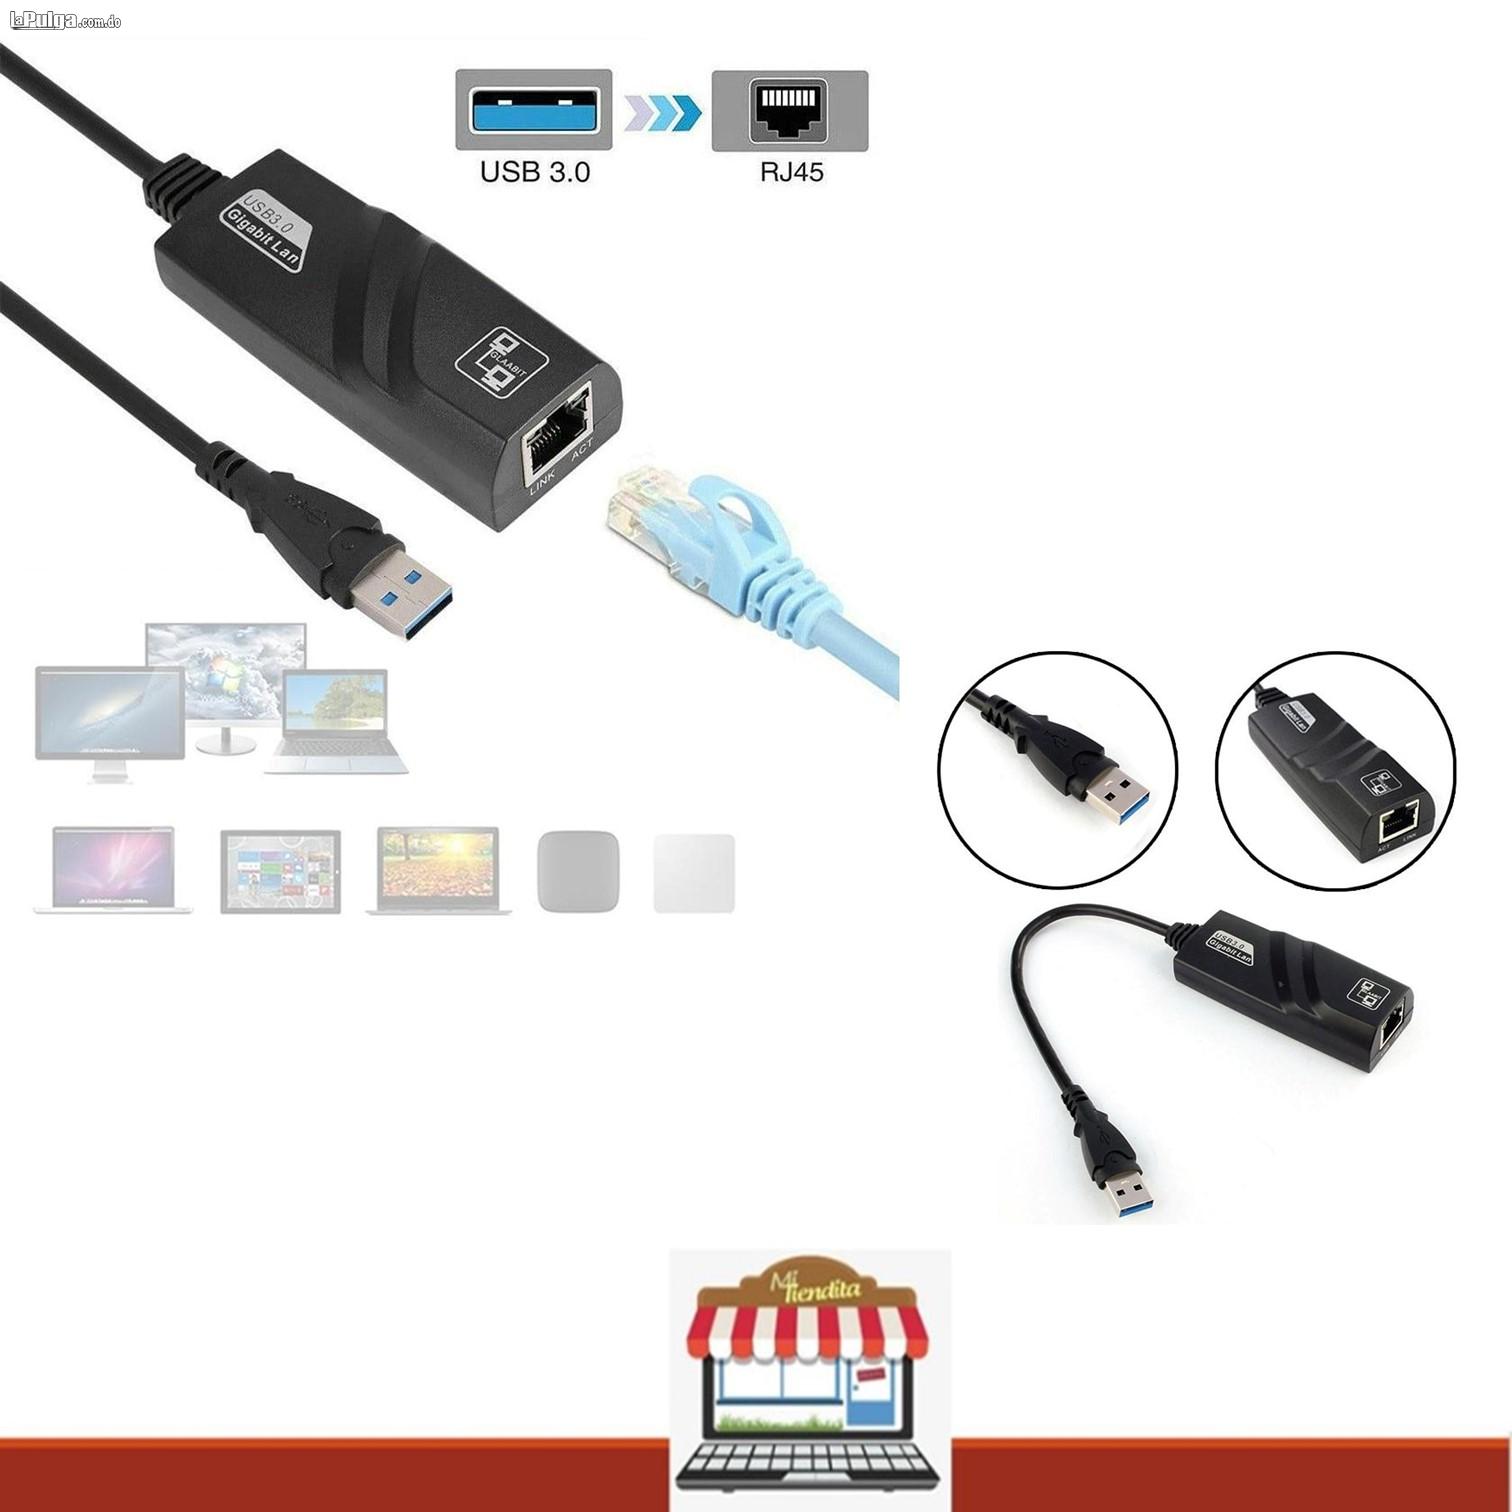 USB 3.0 a 10/100/1000 Gigabit RJ45 Ethernet LAN adaptador de red 1000M Foto 7043204-5.jpg